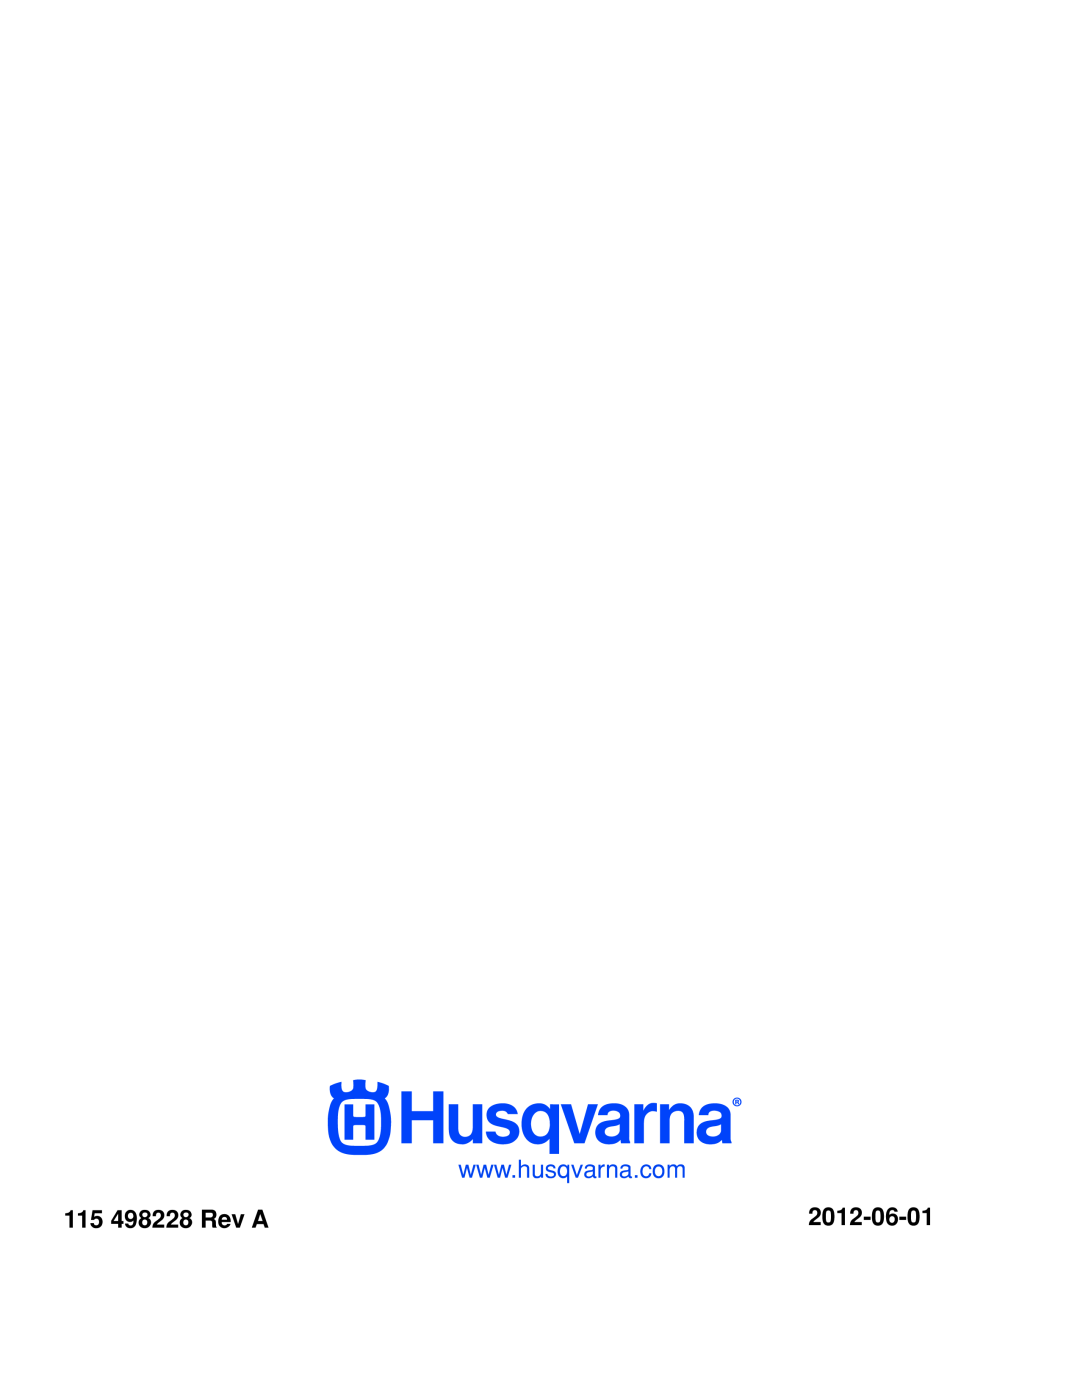 Husqvarna RZ4221 BF / 967176101 warranty 115 498228 Rev A, 2012-06-01 